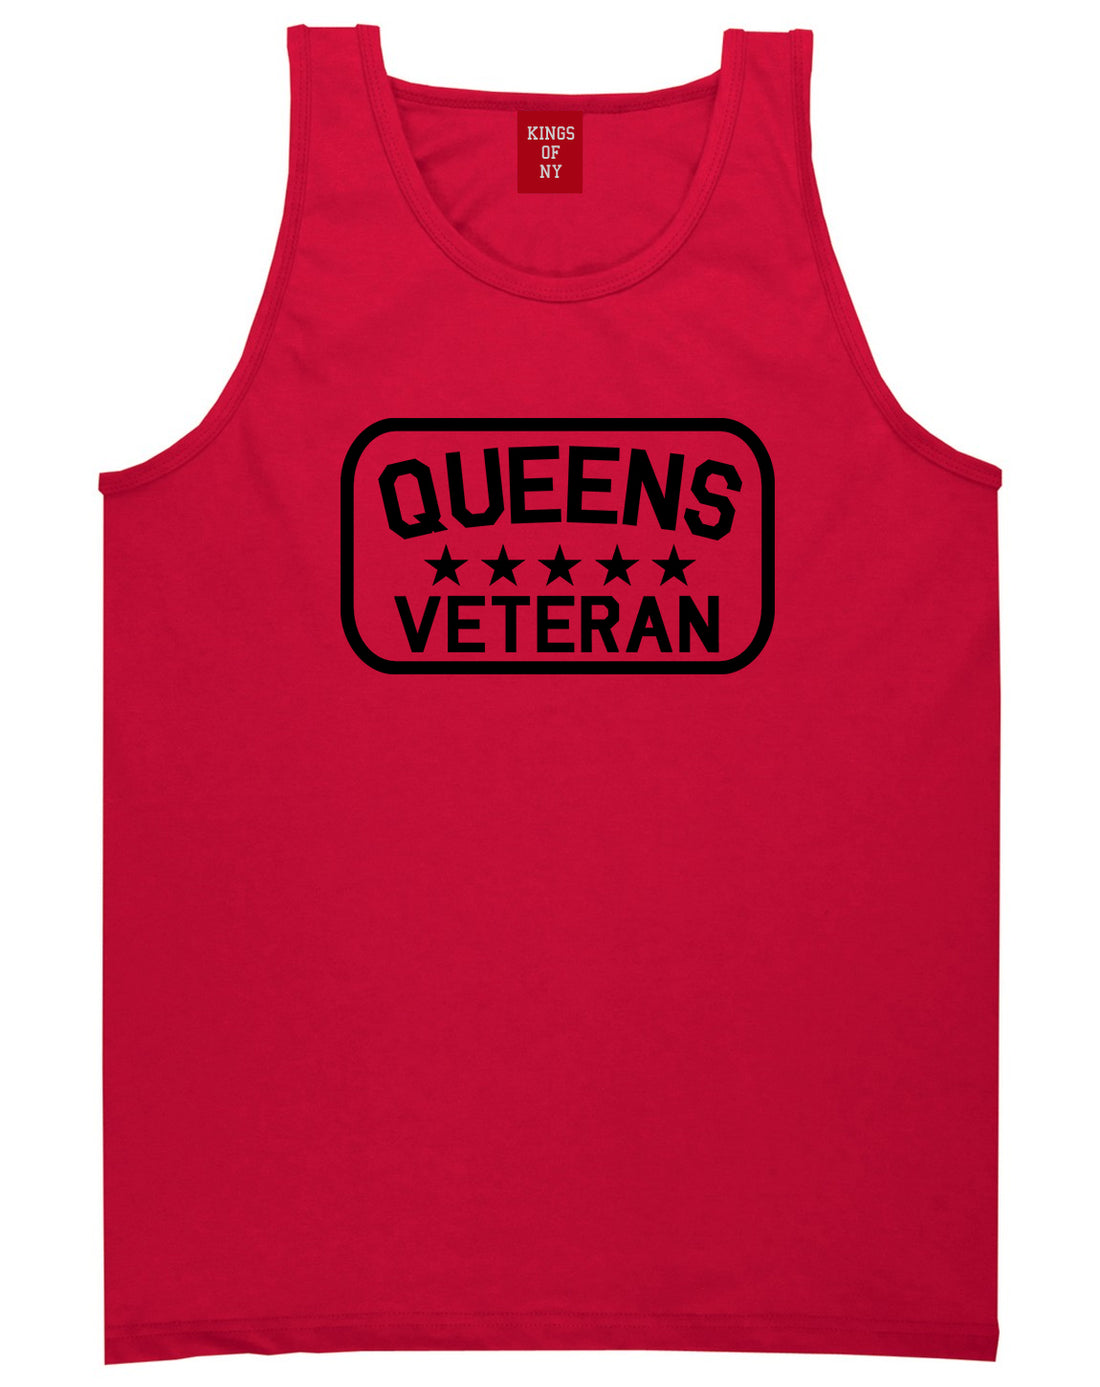 Queens Veteran Mens Tank Top Shirt Red